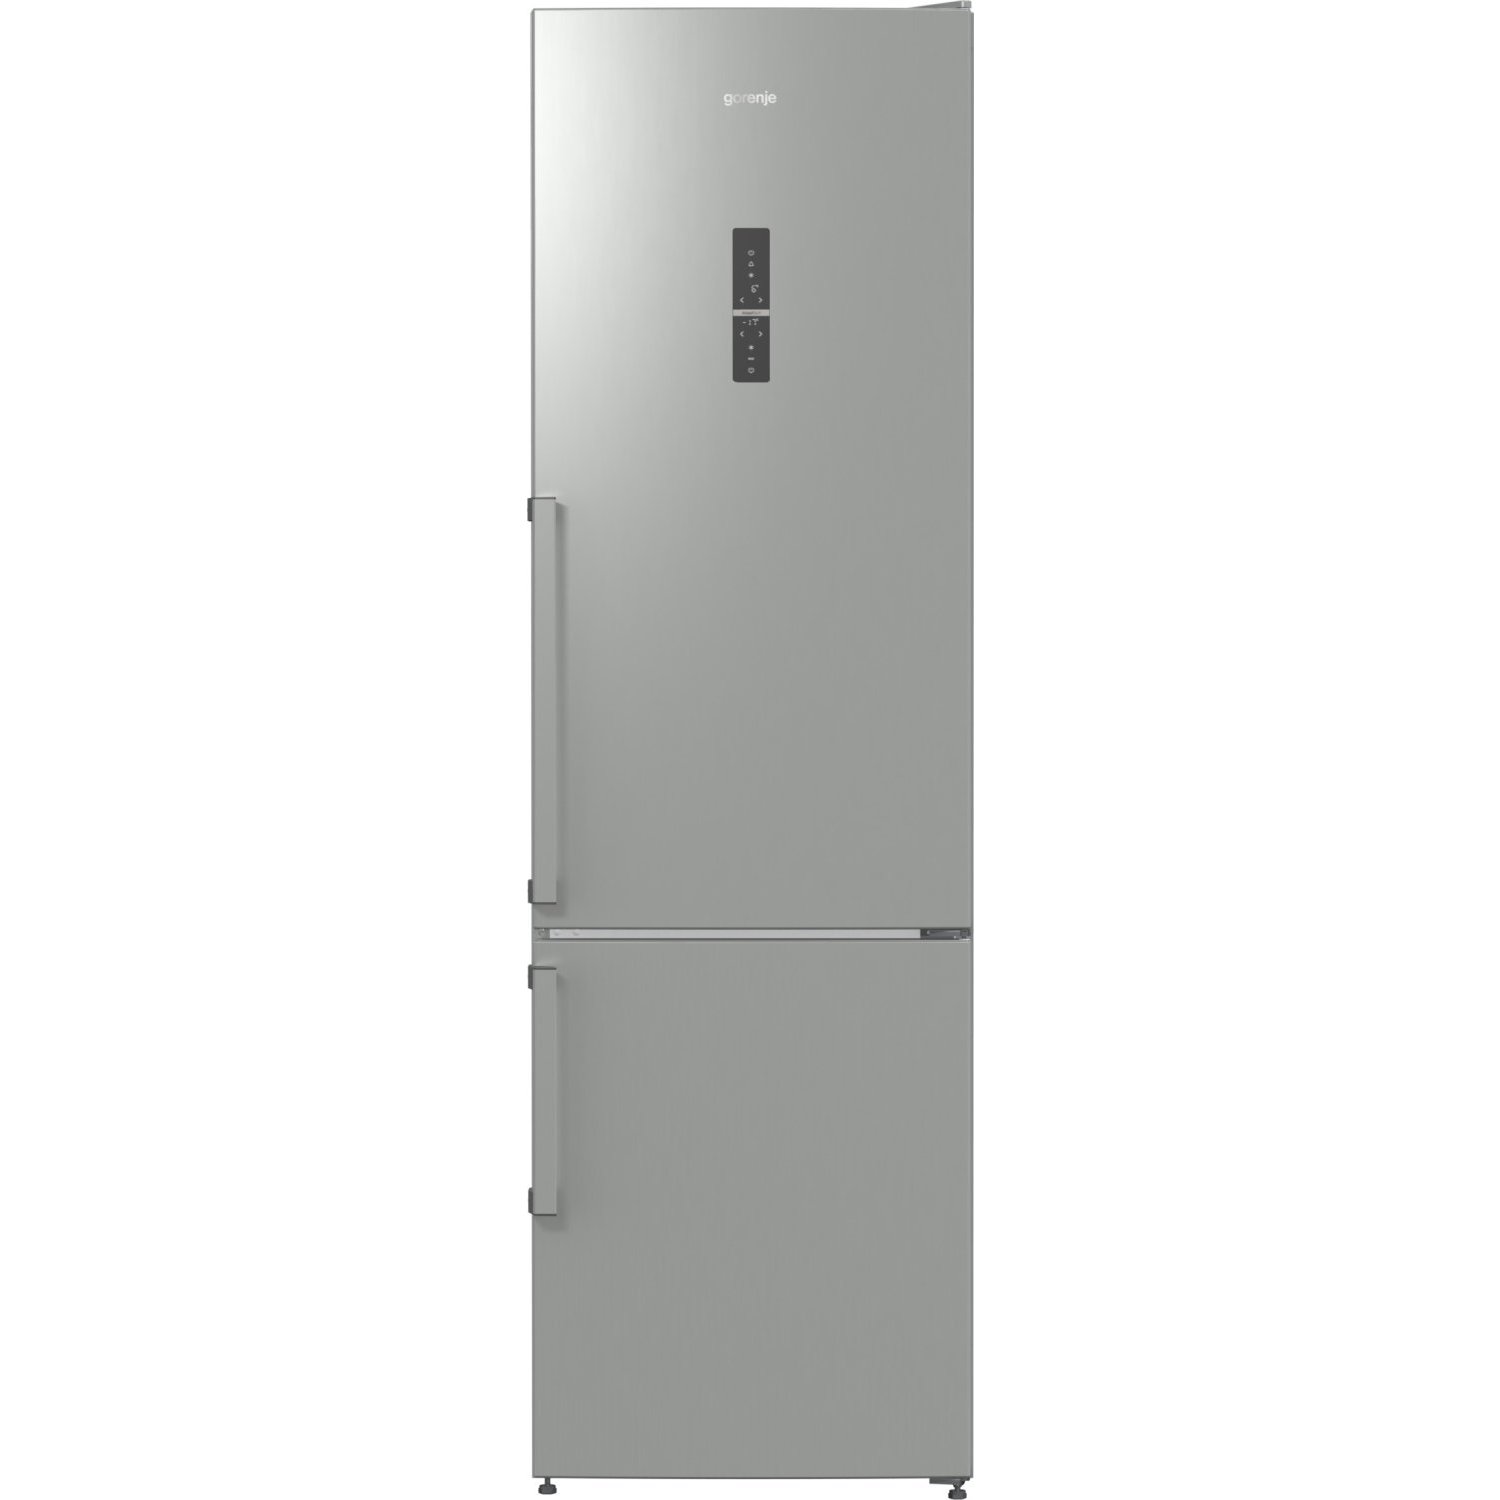 Холодильник узкий 45 купить. Холодильник Beko RCSK 379m21s. Холодильник Beko CSKR 5310m21 s. Холодильник Beko CSKR 5335m21 s. Холодильник Beko rcsk310m20sb.